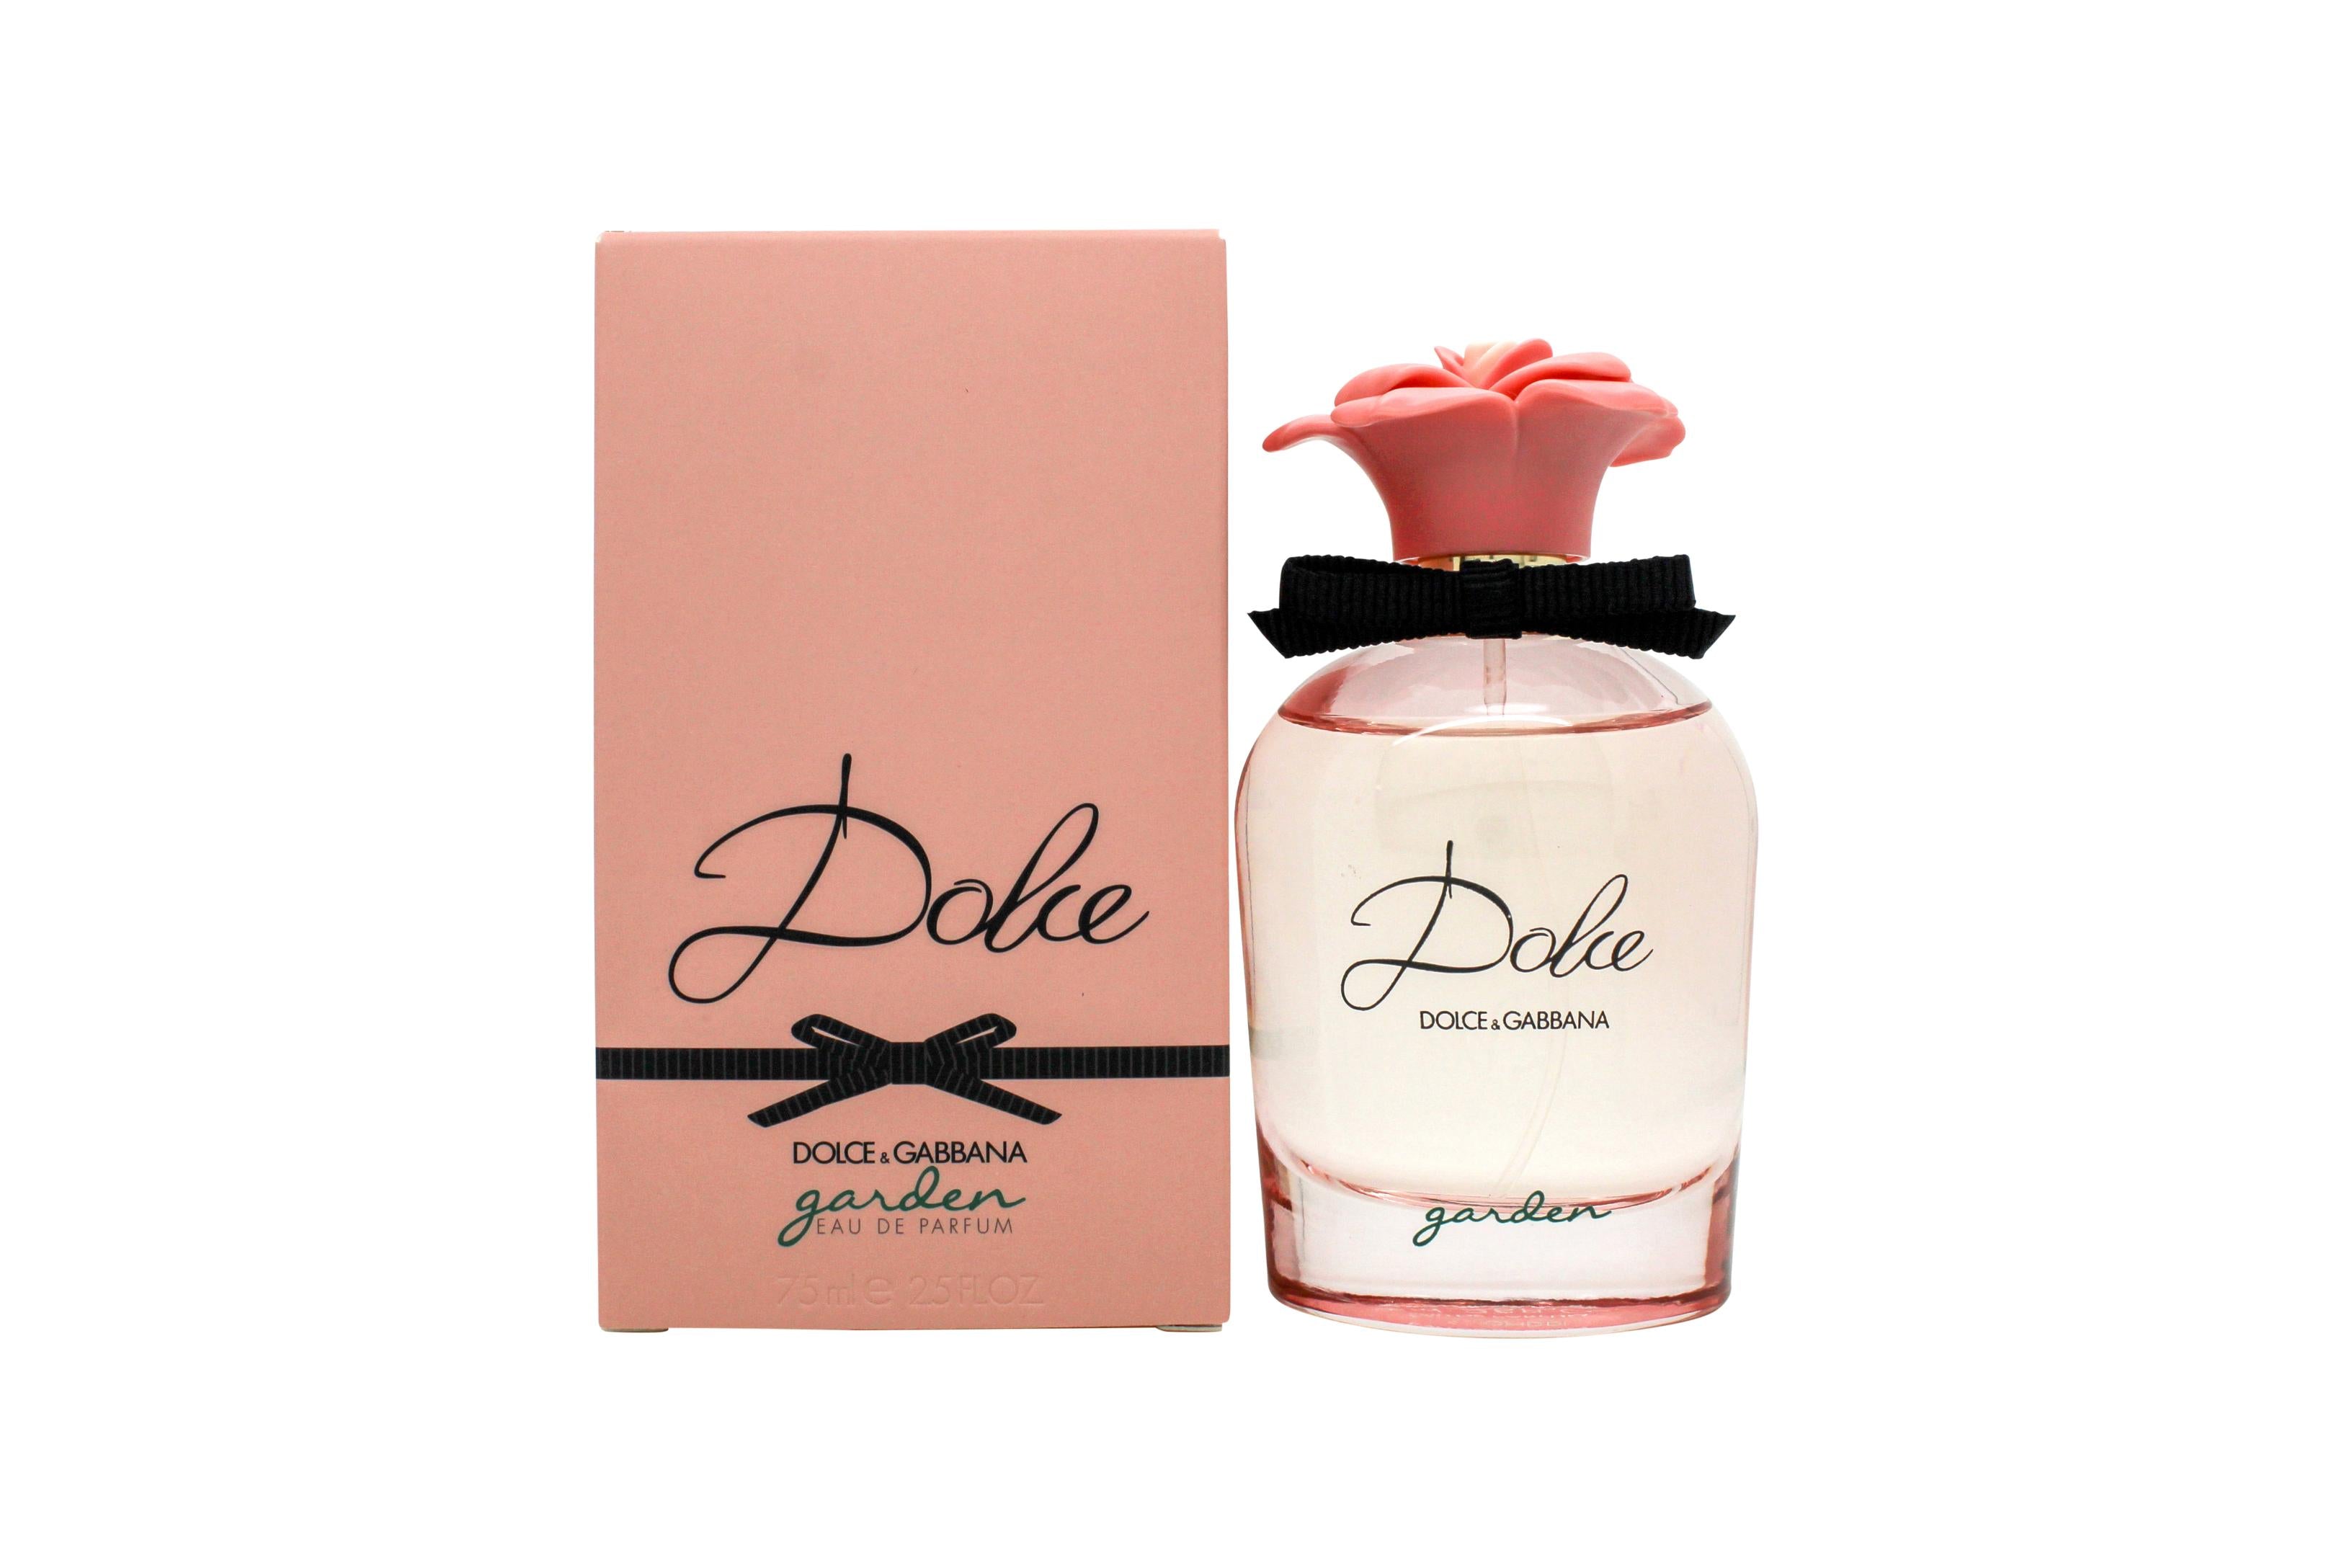 View Dolce Gabbana Dolce Garden Eau de Parfum 75ml Spray information